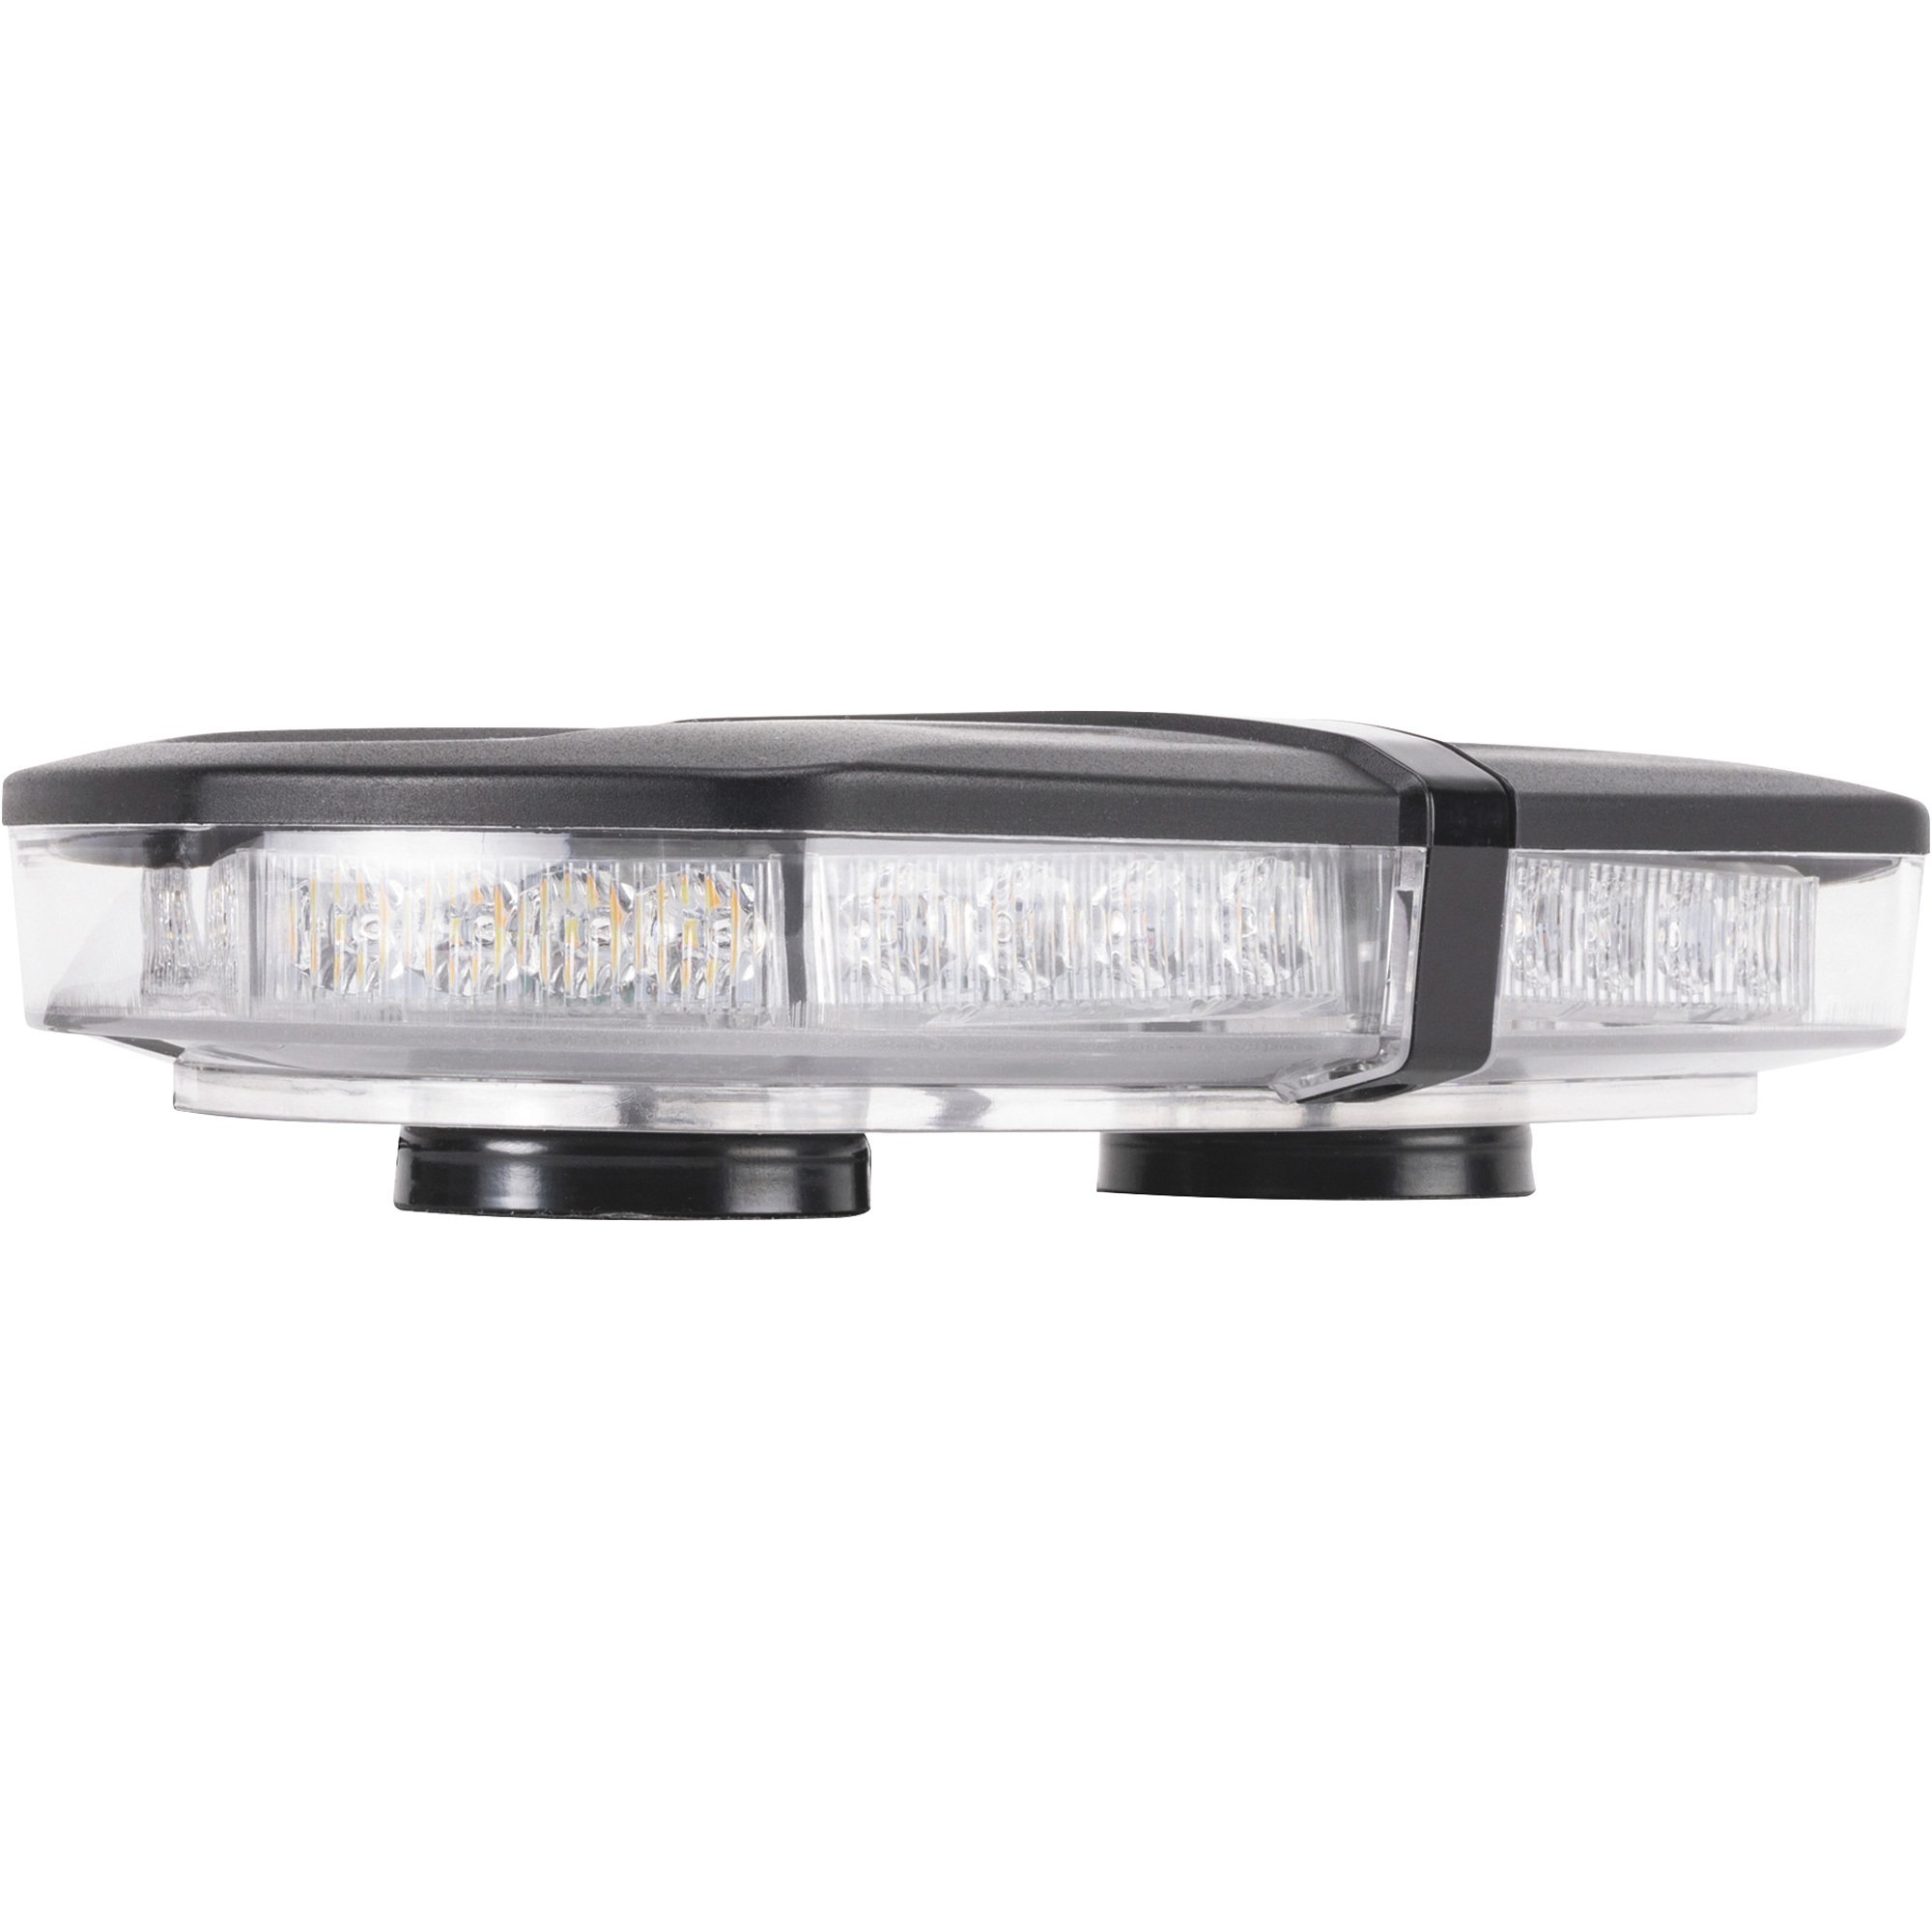 Blazer 12V LED Class 2 Micro Warning Light Bar — White/Amber, 9 Flash  Patterns, Magnetic Mount, Model# C4856CAC